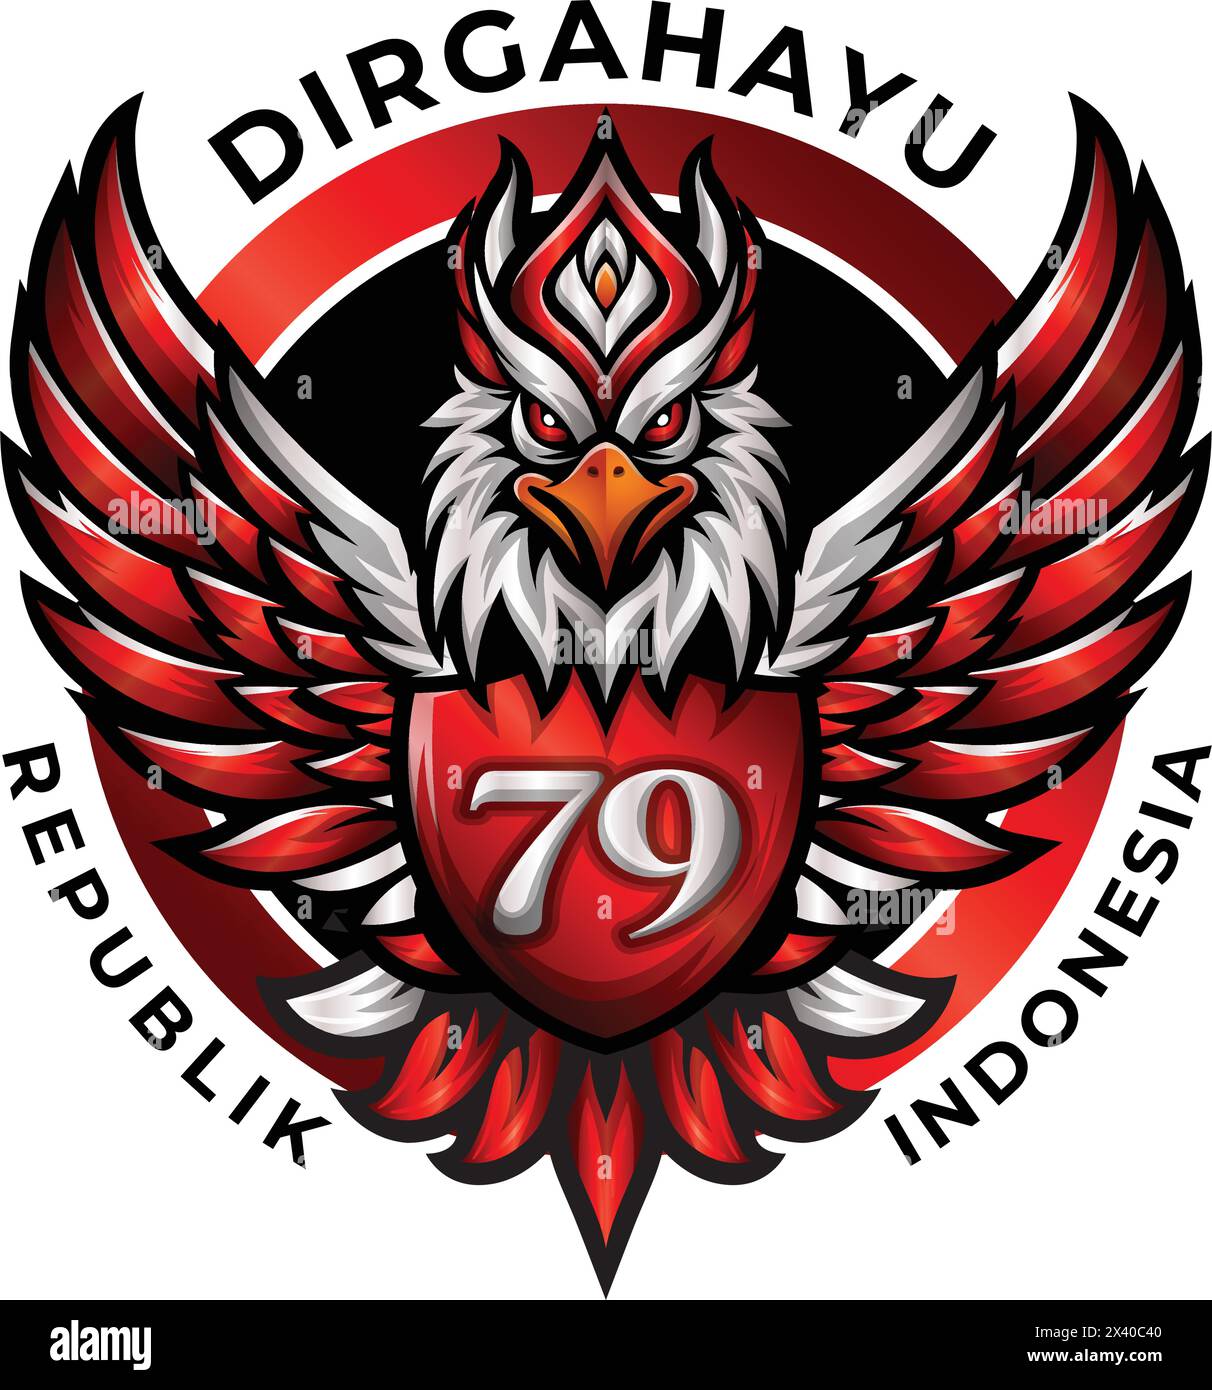 Dirgahayu Republik Indonesia ke 79 vector logo with garuda mascot illustration Stock Vector